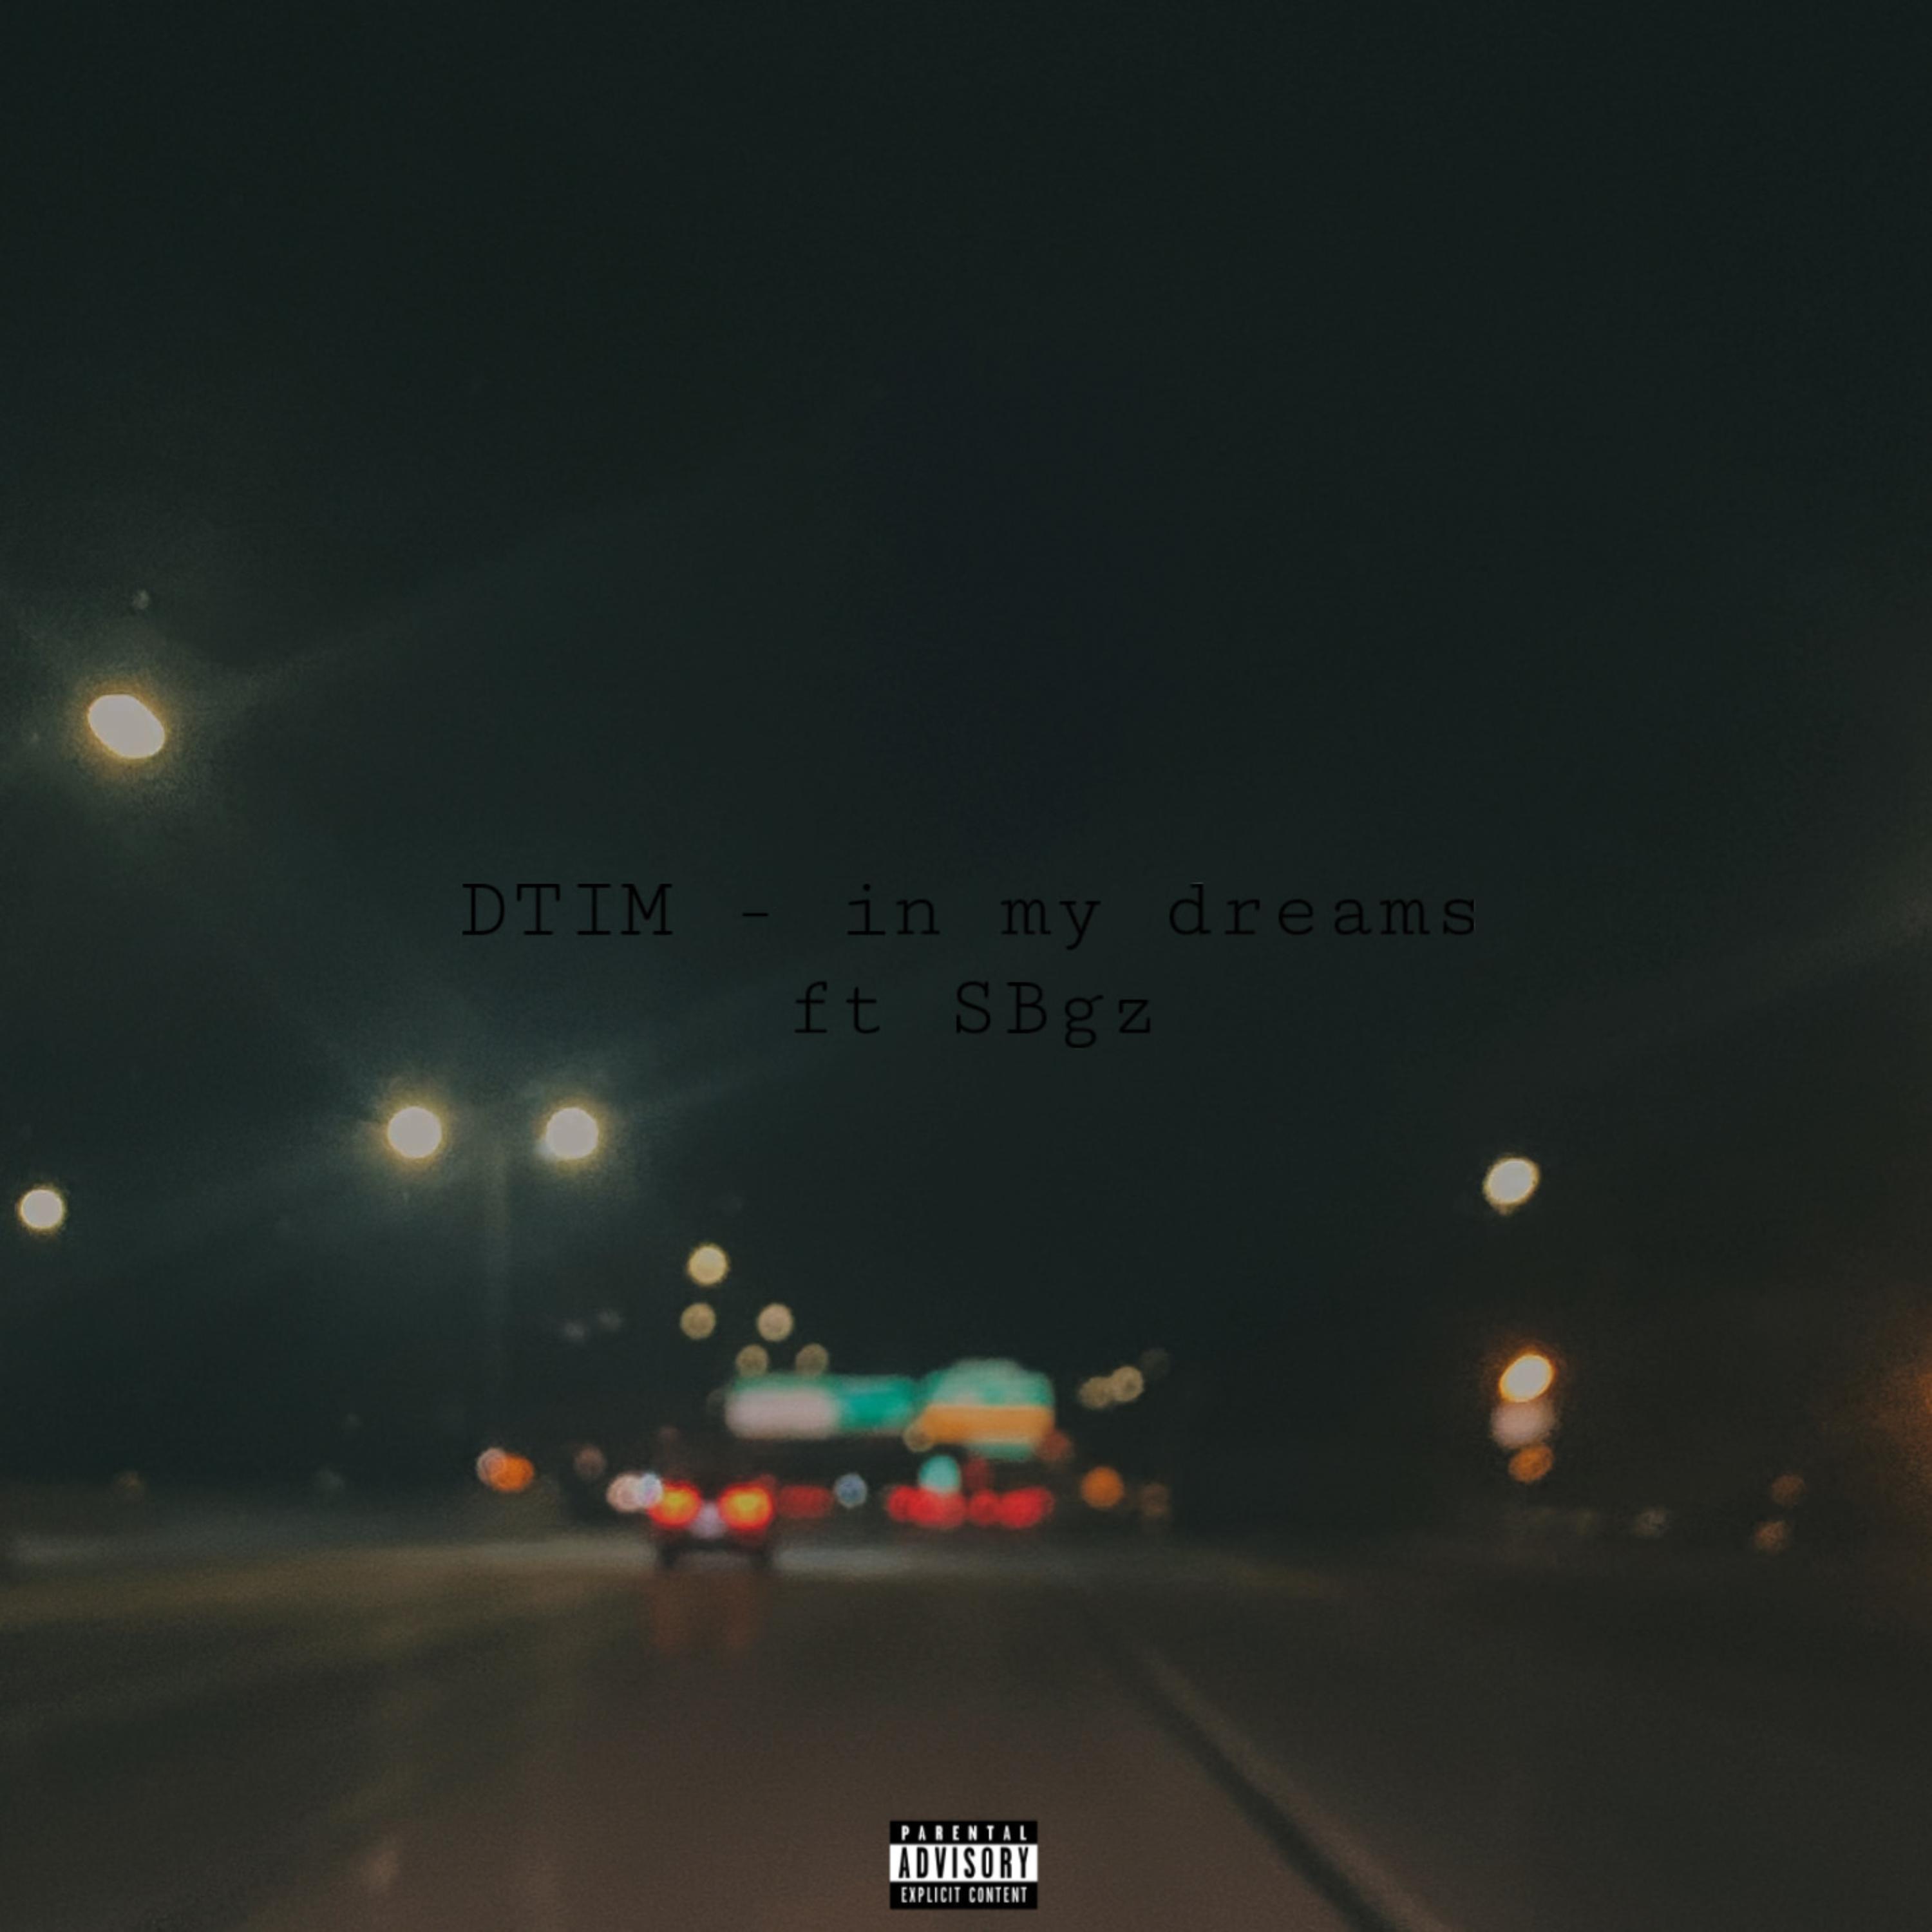 SBgz - In My Dreams